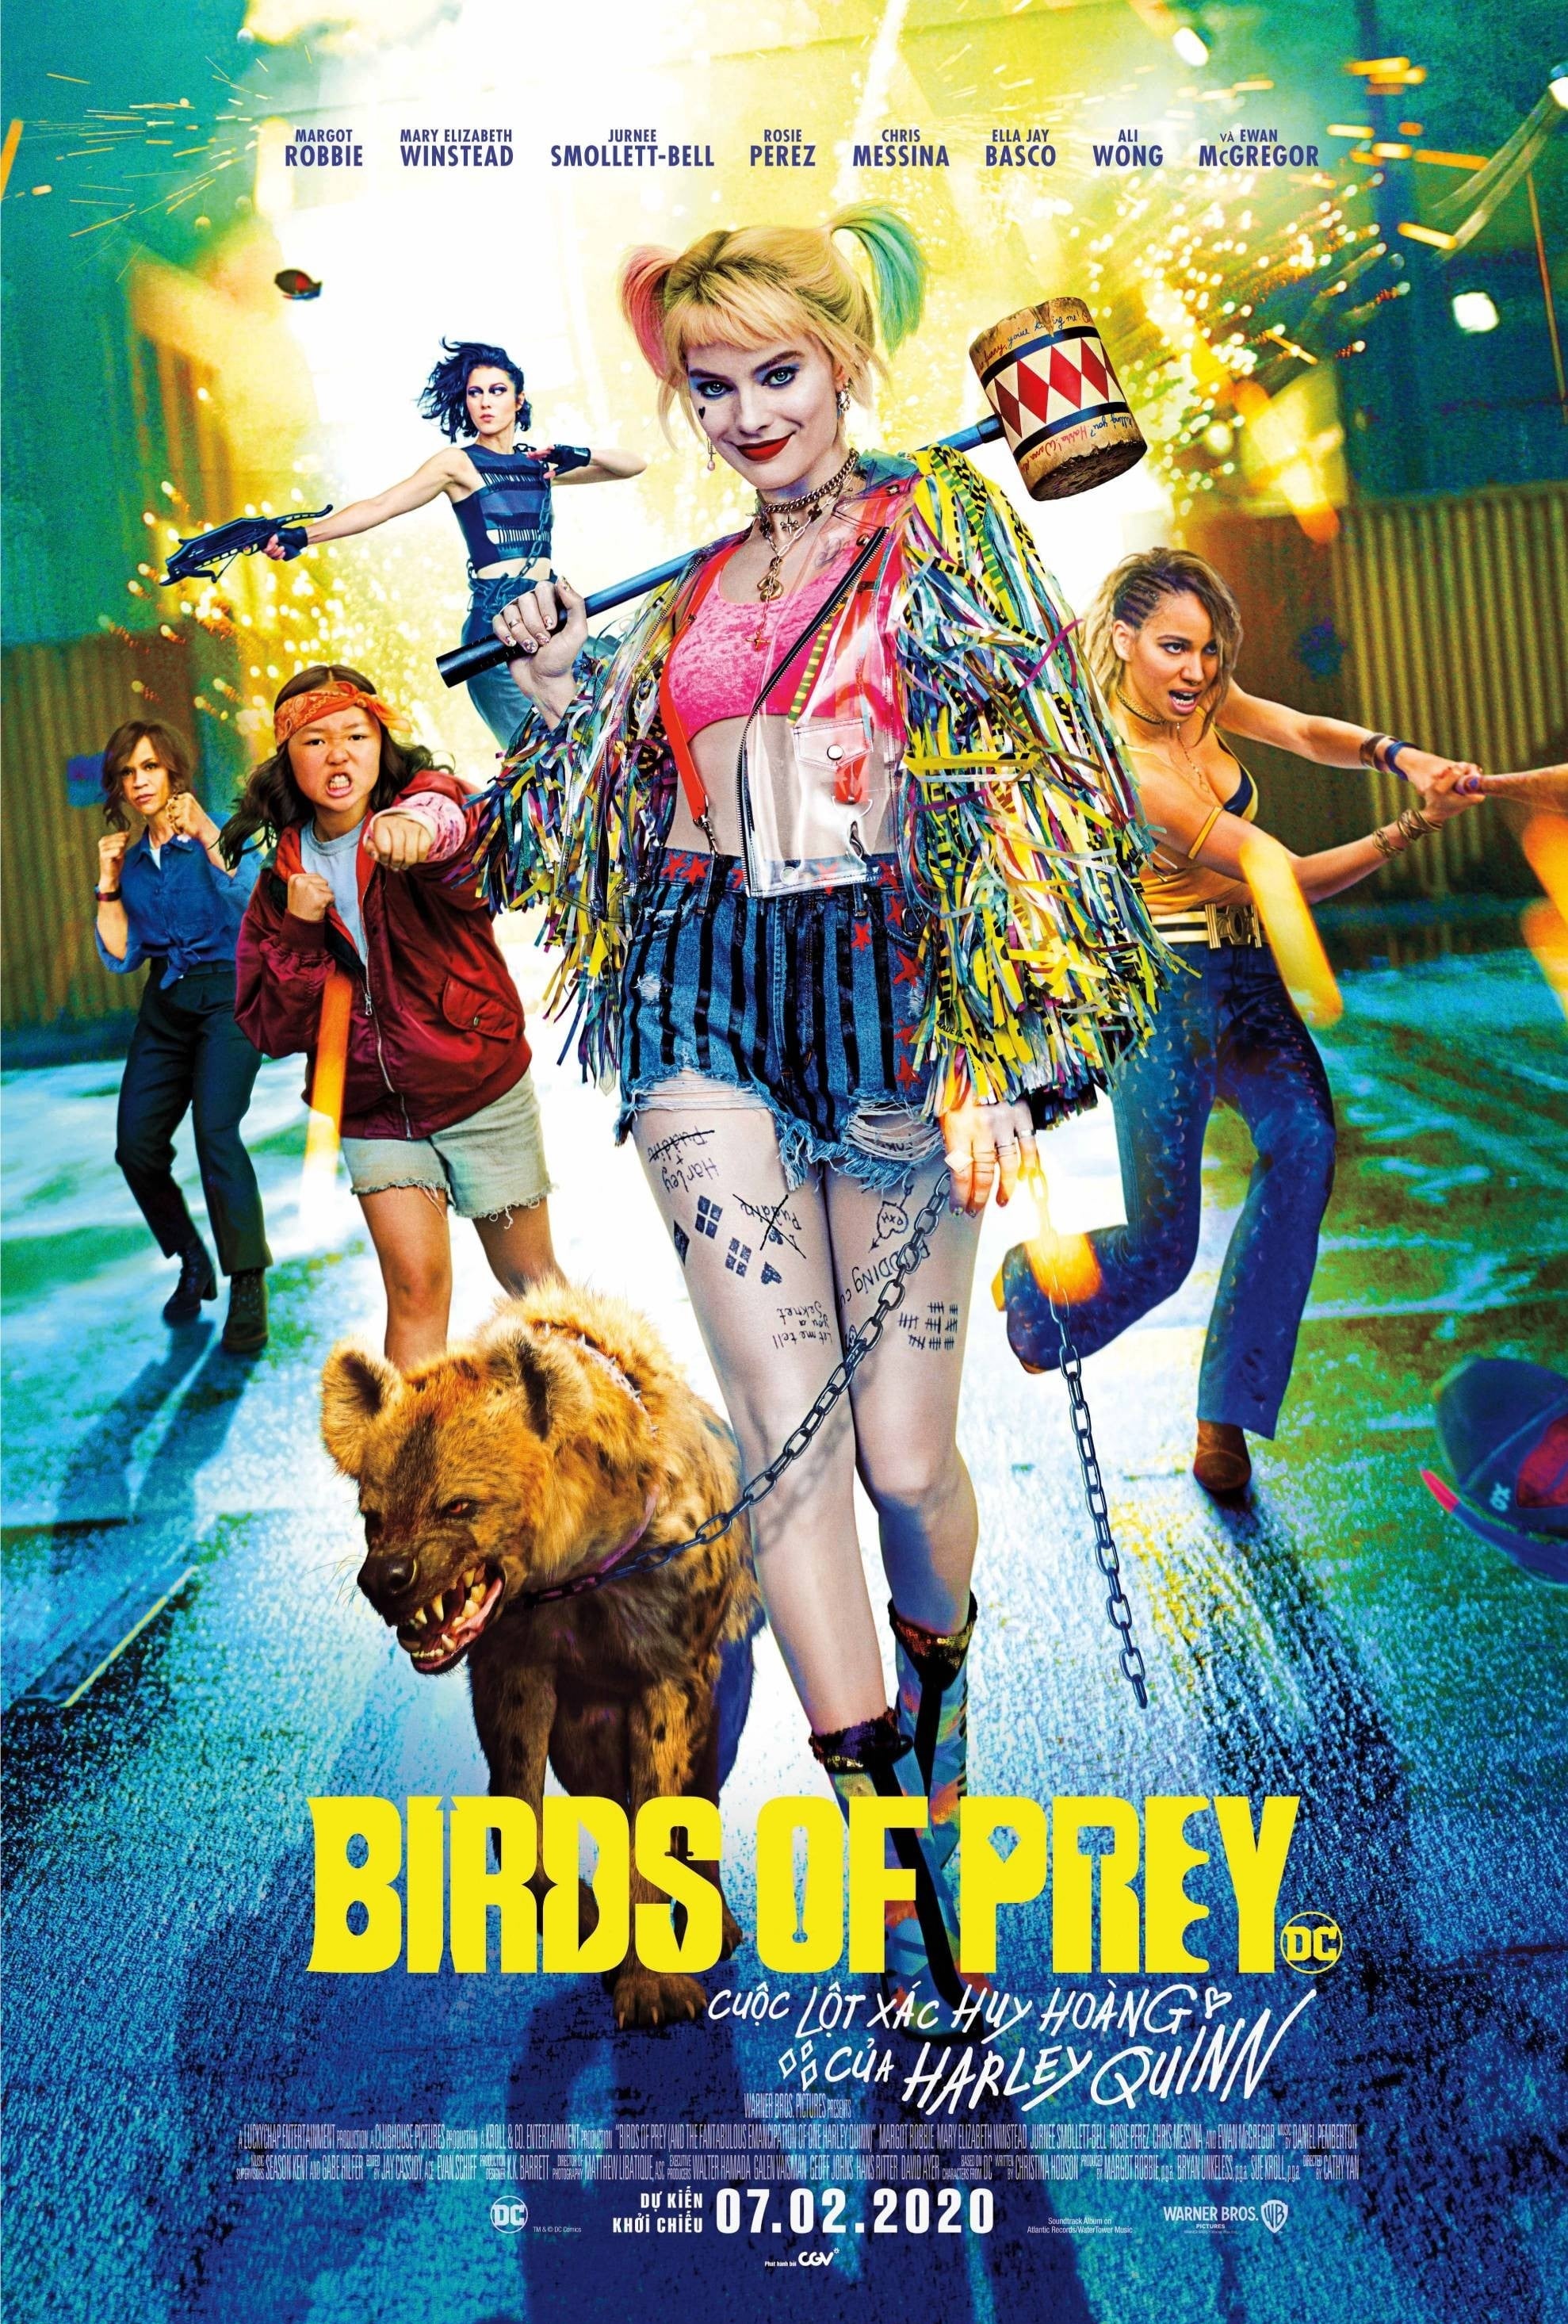 Banner Phim Birds of Prey: Cuộc Lột Xác Huy Hoàng Của Harley Quinn (Birds of Prey (and the Fantabulous Emancipation of One Harley Quinn))